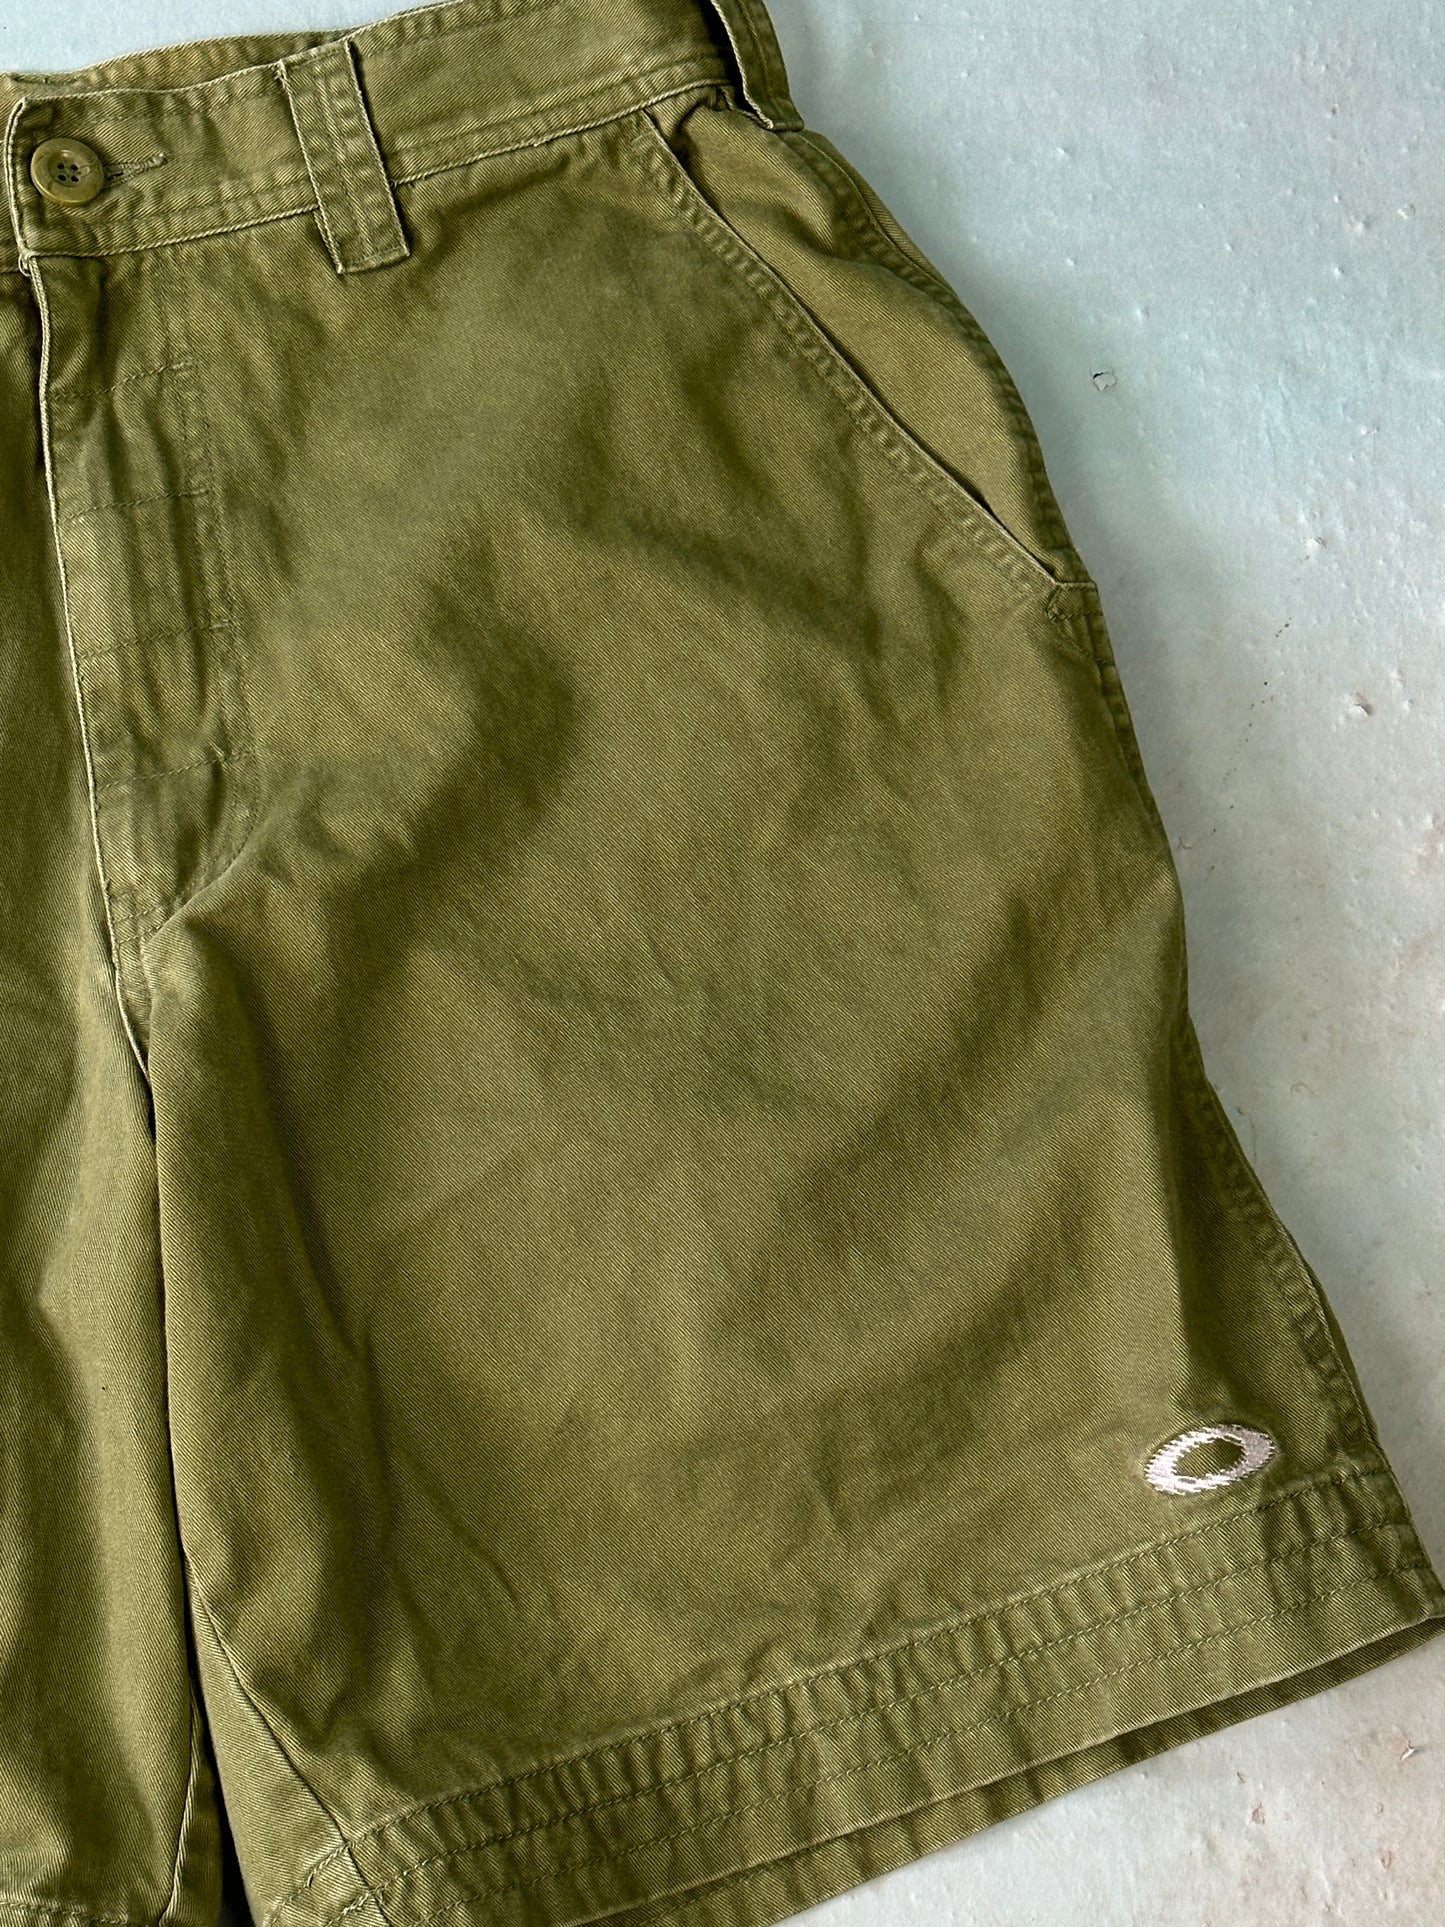 Oakley Vintage Shorts - 30